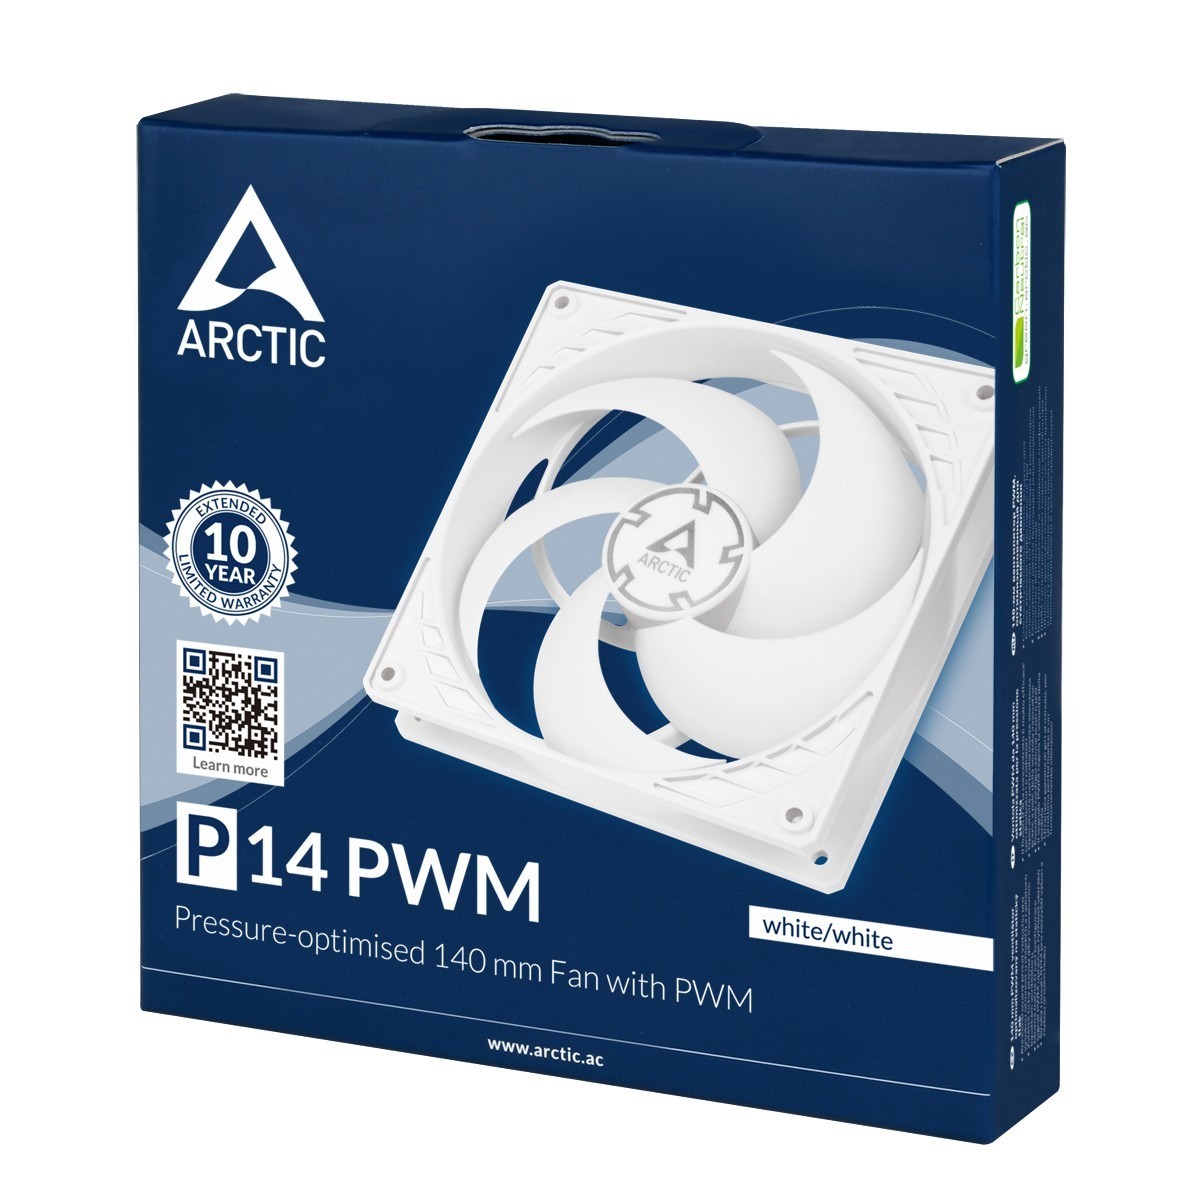 ARCTIC 公开 2021 新款风扇　P 系列引进透明叶扇版本